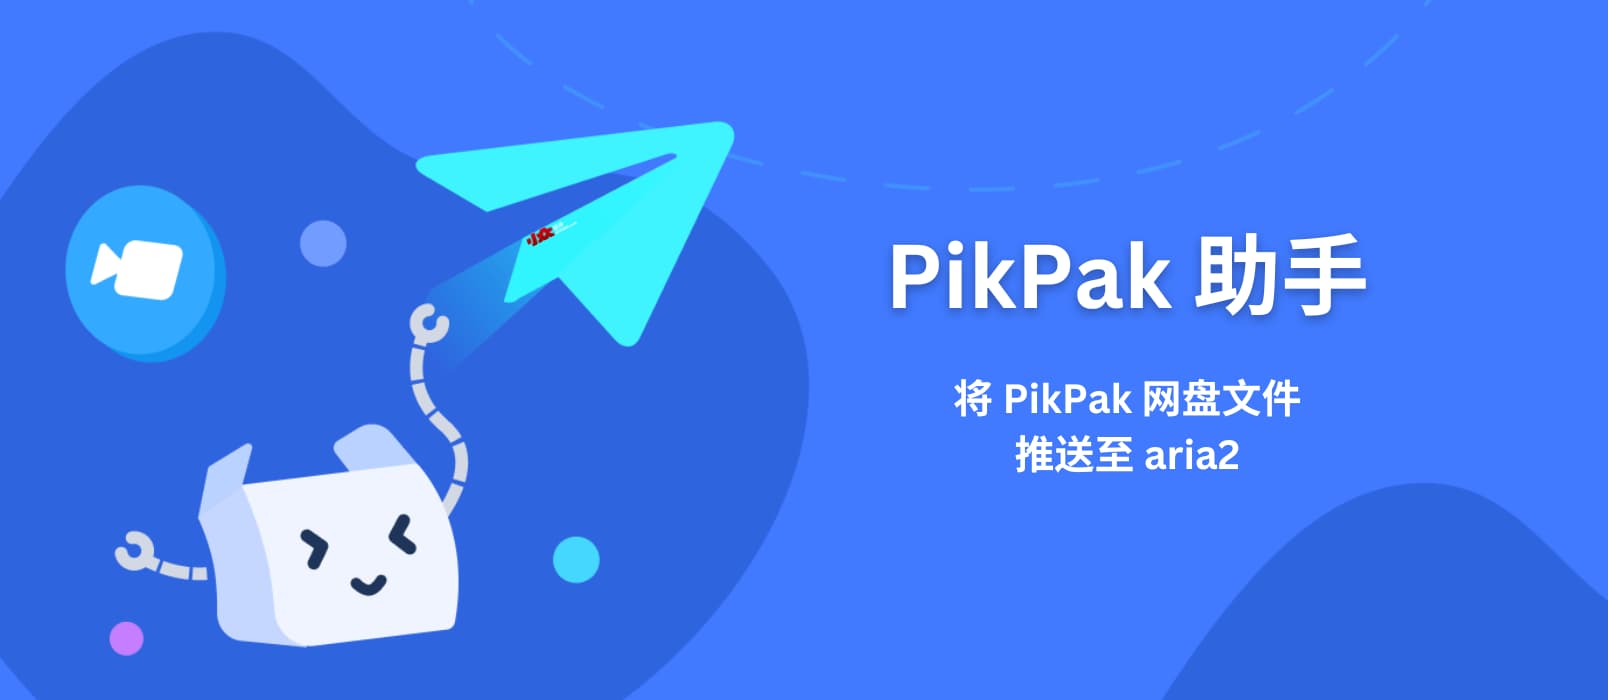 PikPak 助手 - 将 PikPak 网盘文件推送至 aria2[油猴脚本]